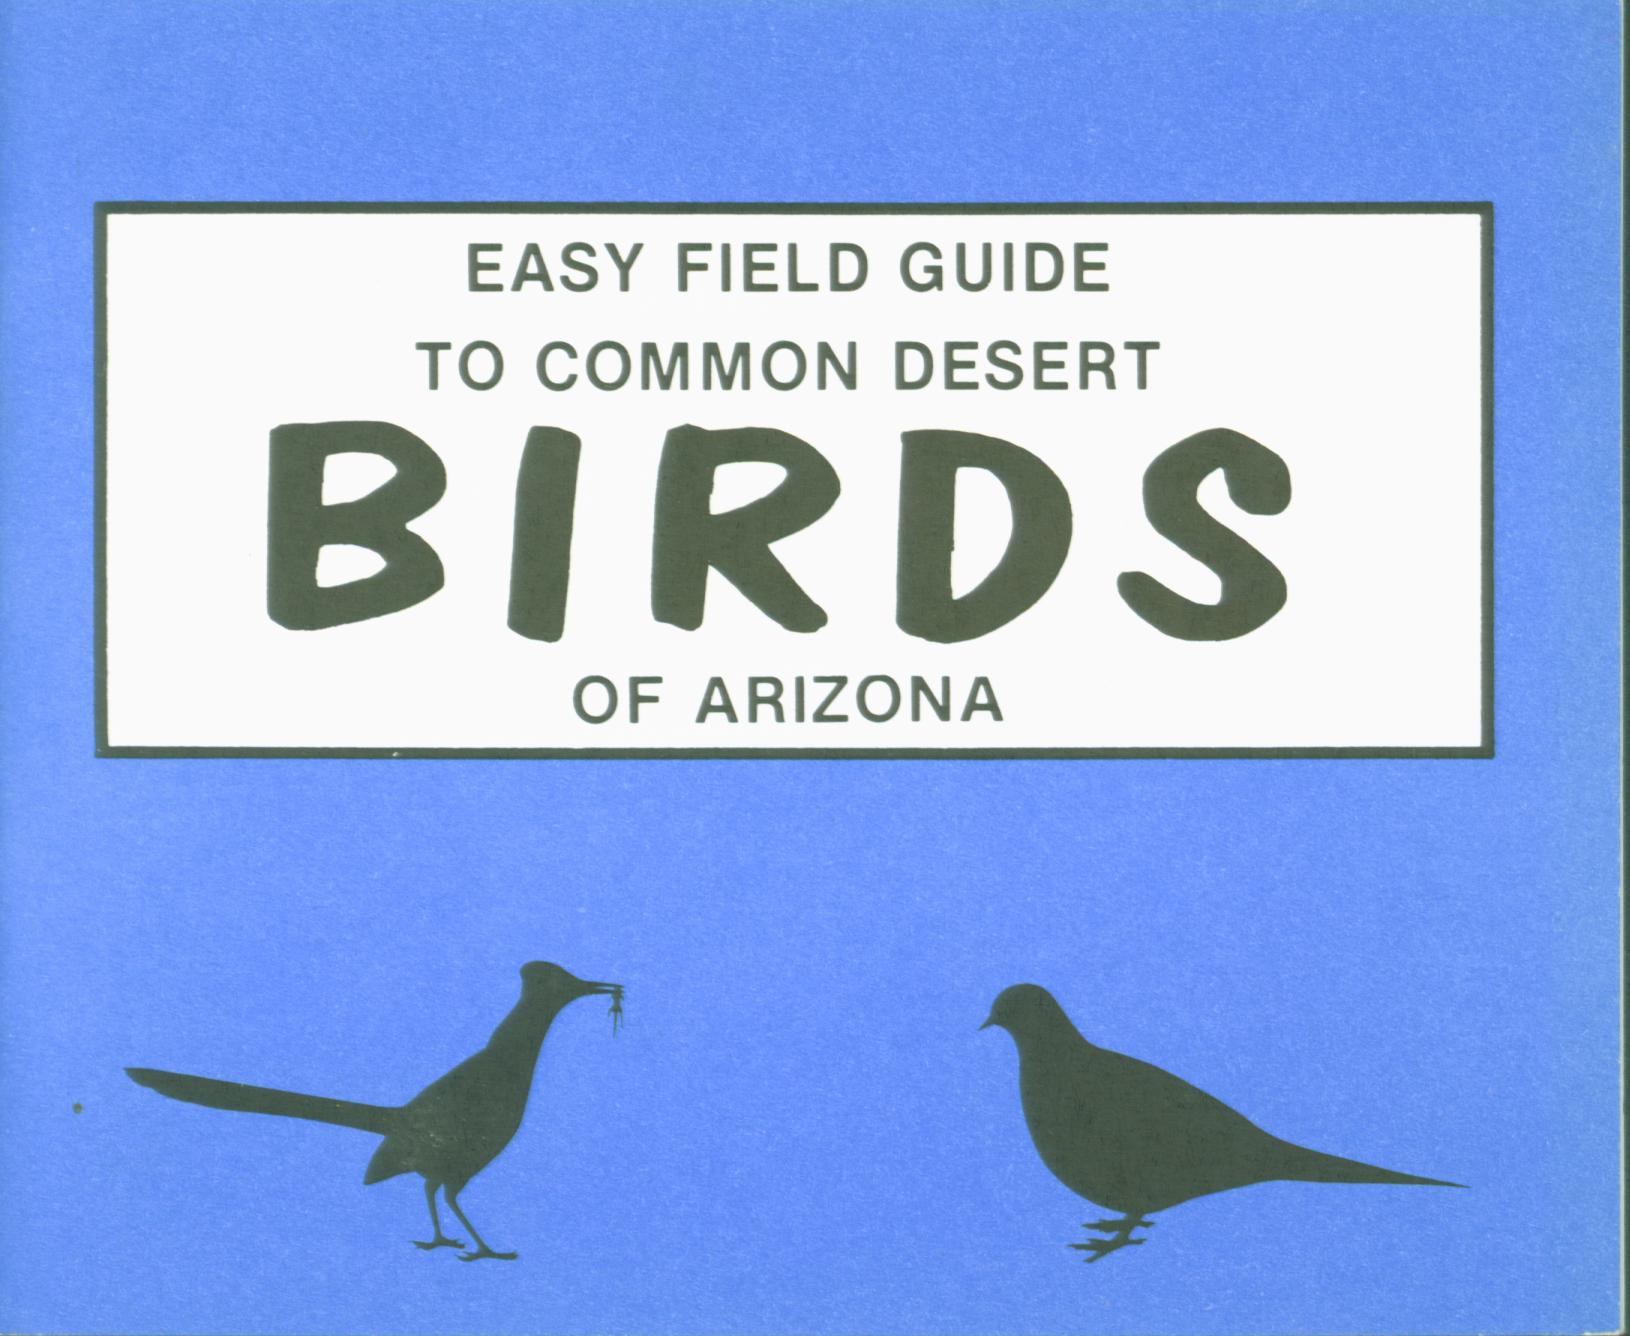 EASY FIELD GUIDE TO COMMON DESERT BIRDS OF ARIZONA. 